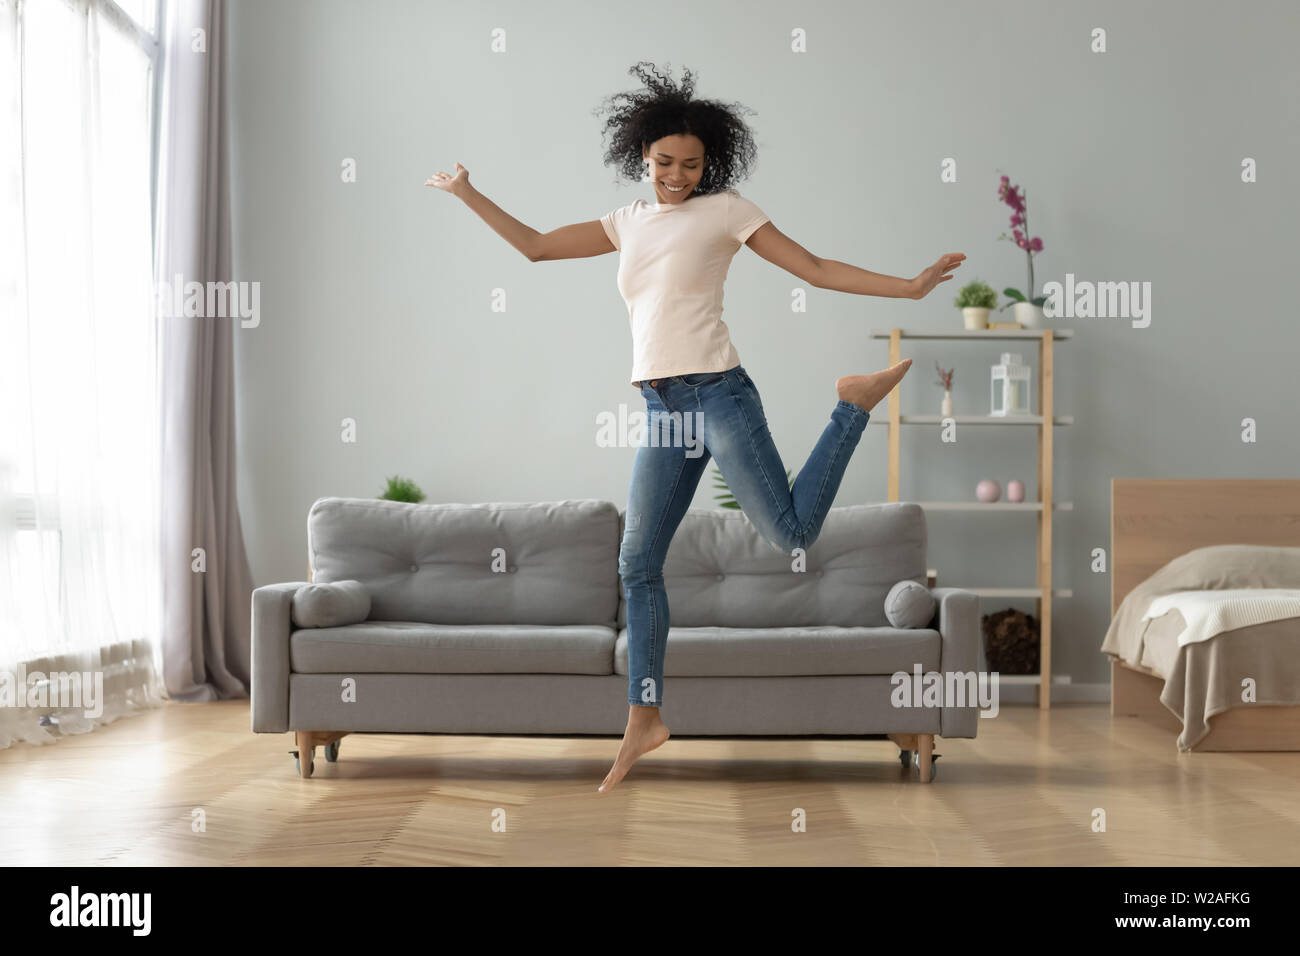 Carefree joyful african girl jumping dancing alone at home Stock Photo